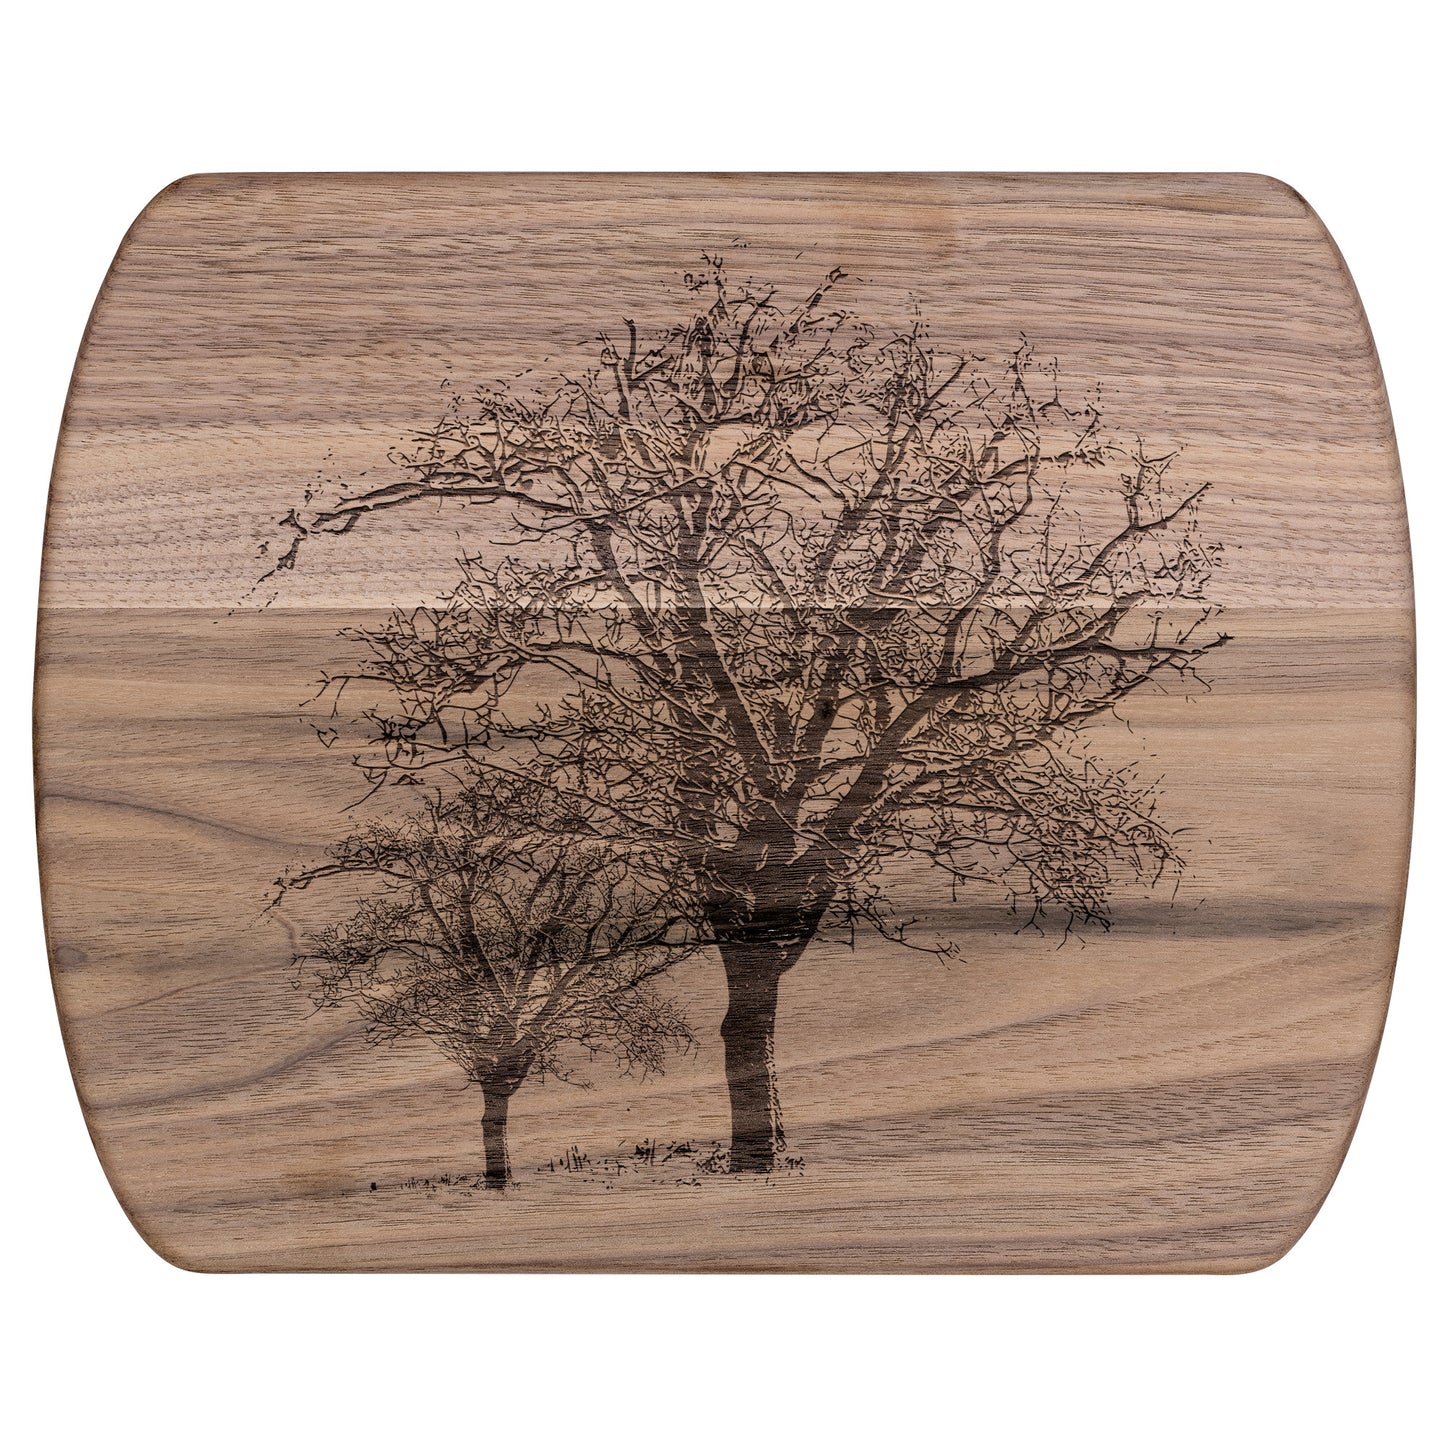 Walnut Cutting Board, Maple Cutting Board, Oval Cutting Board with Bare Trees, Great Housewarming Gift, Hardwood Farm Boards Made in USA